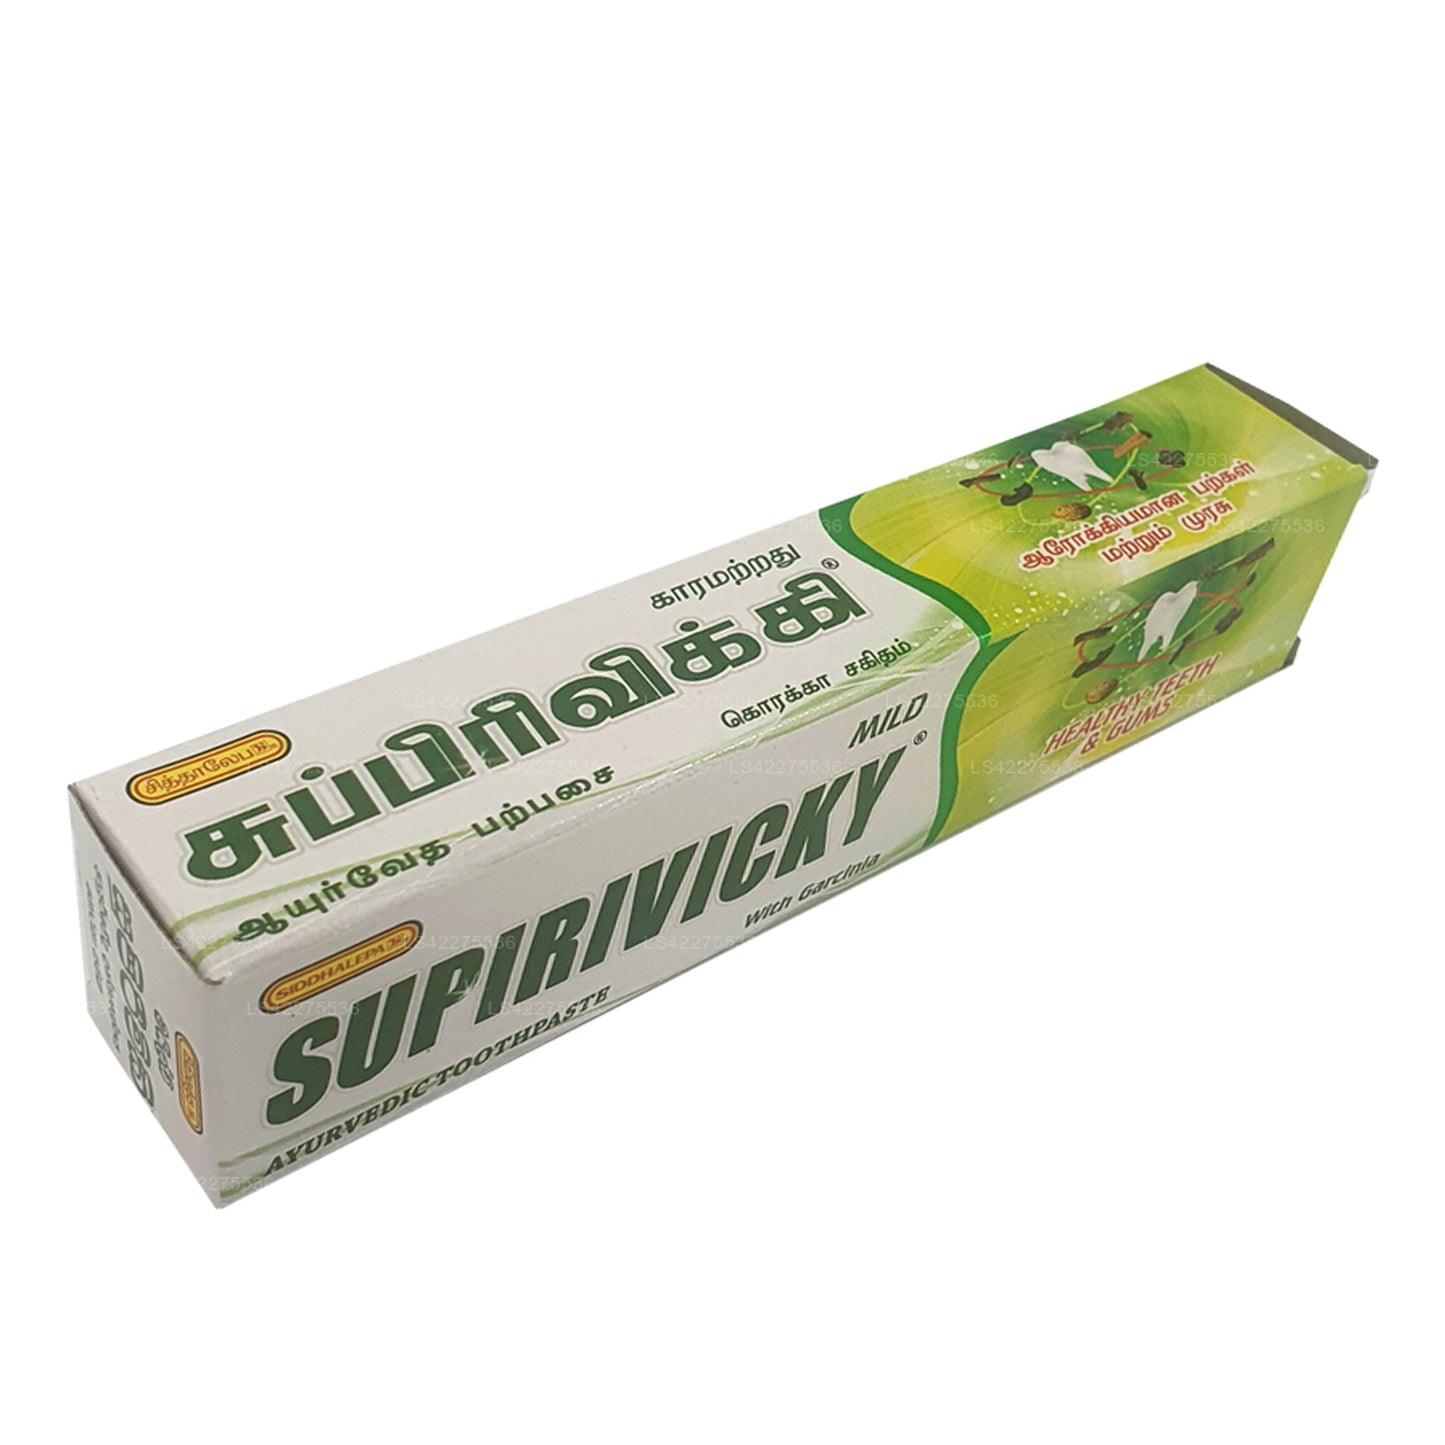 Siddhalepa Supirivicky 温和阿育吠陀牙膏 (40 克)